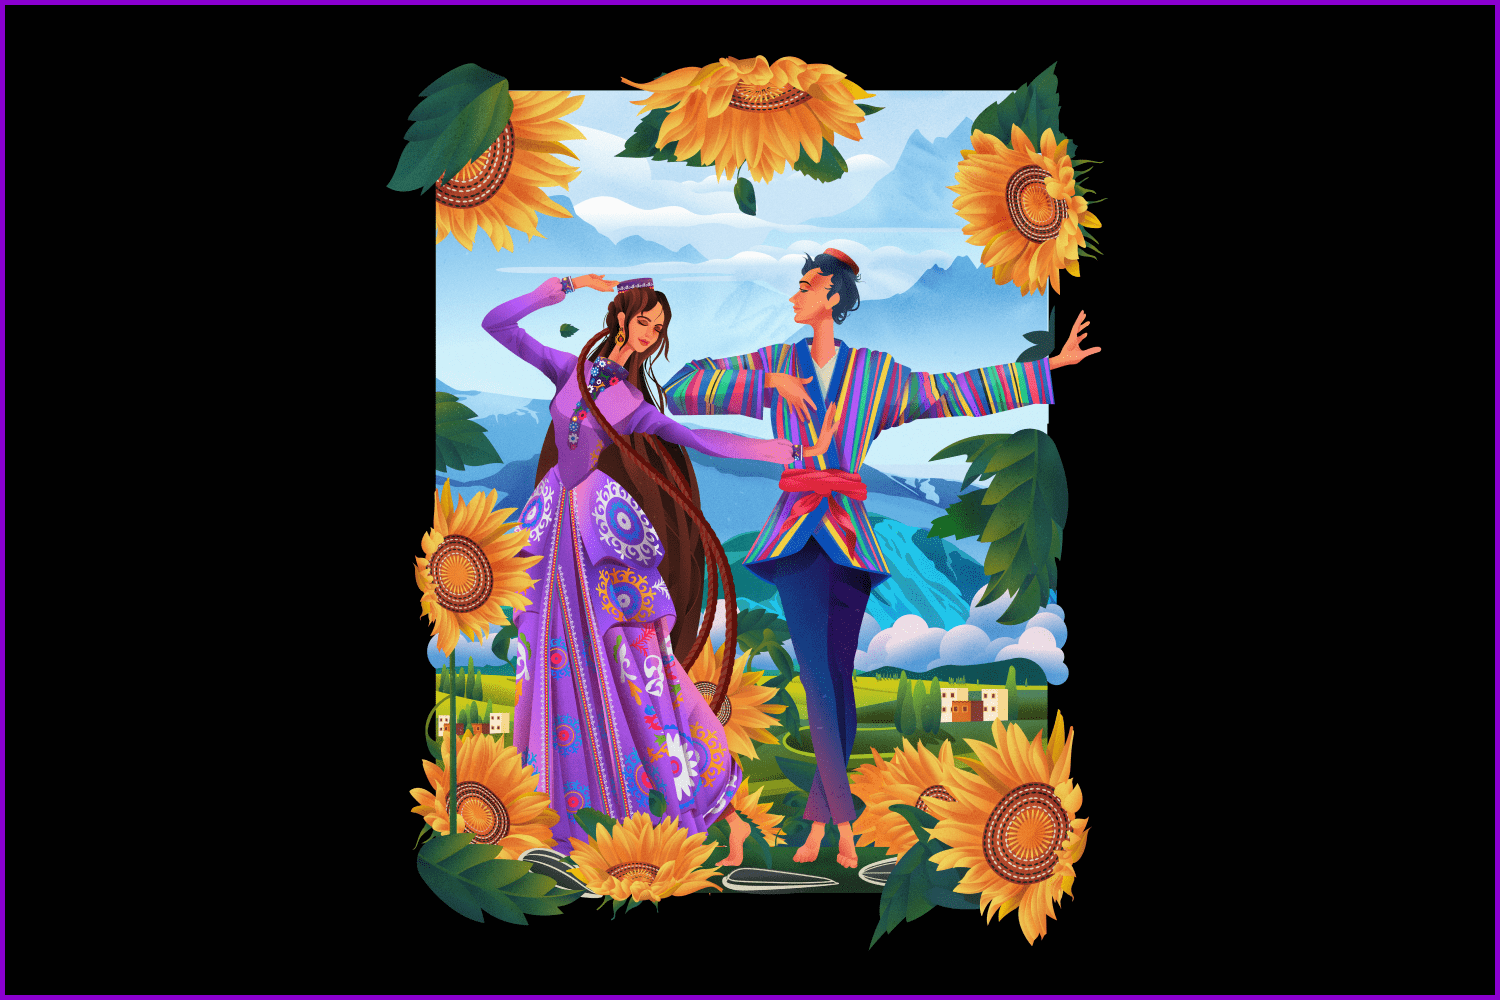 Boy and girl dancing in national wear near sunflowers.